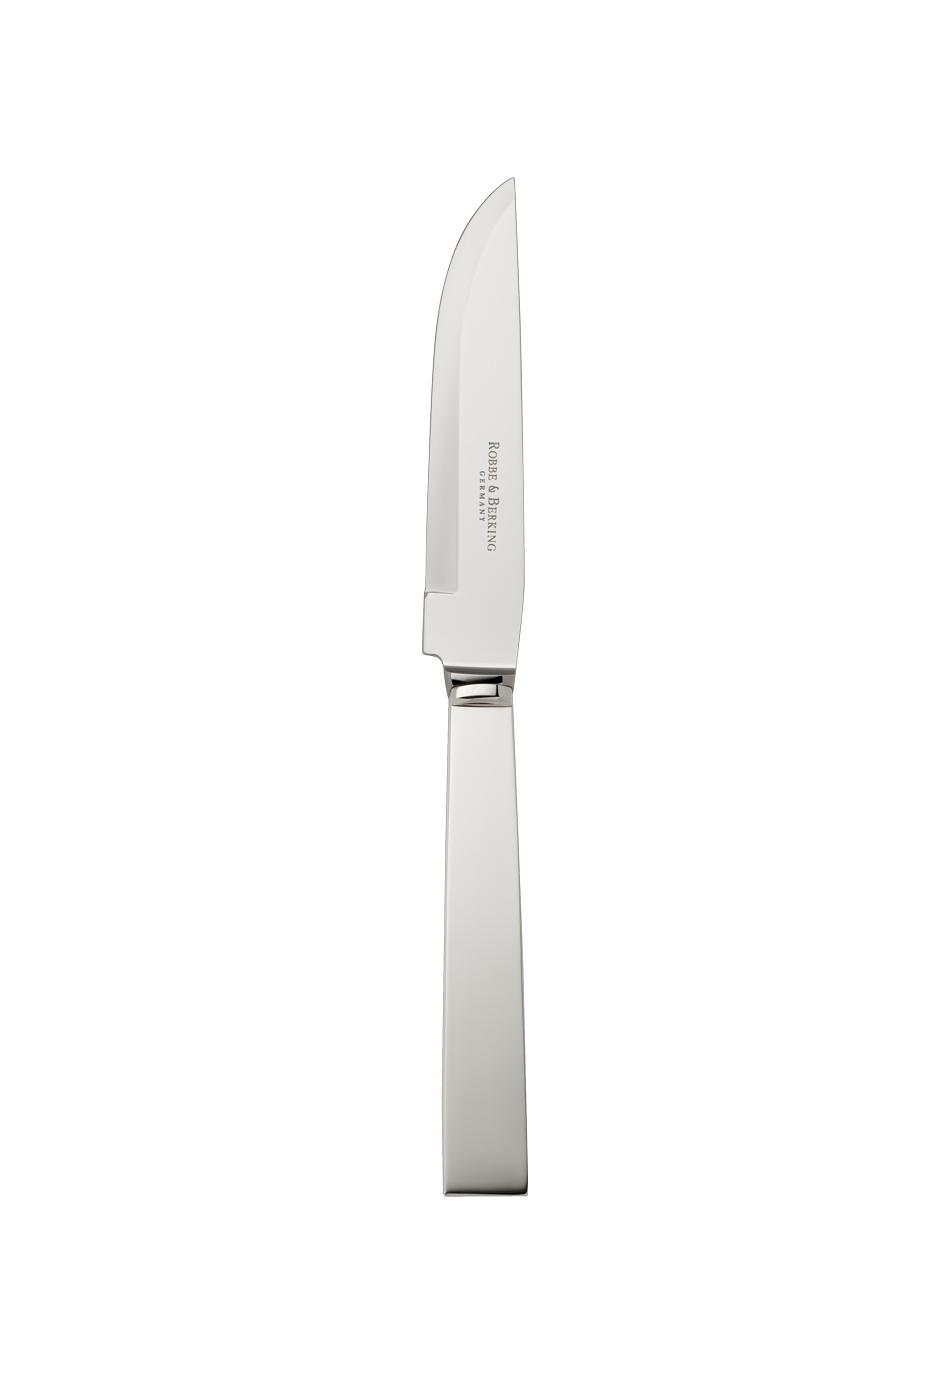 Riva Steakmesser (150g massiv versilbert)